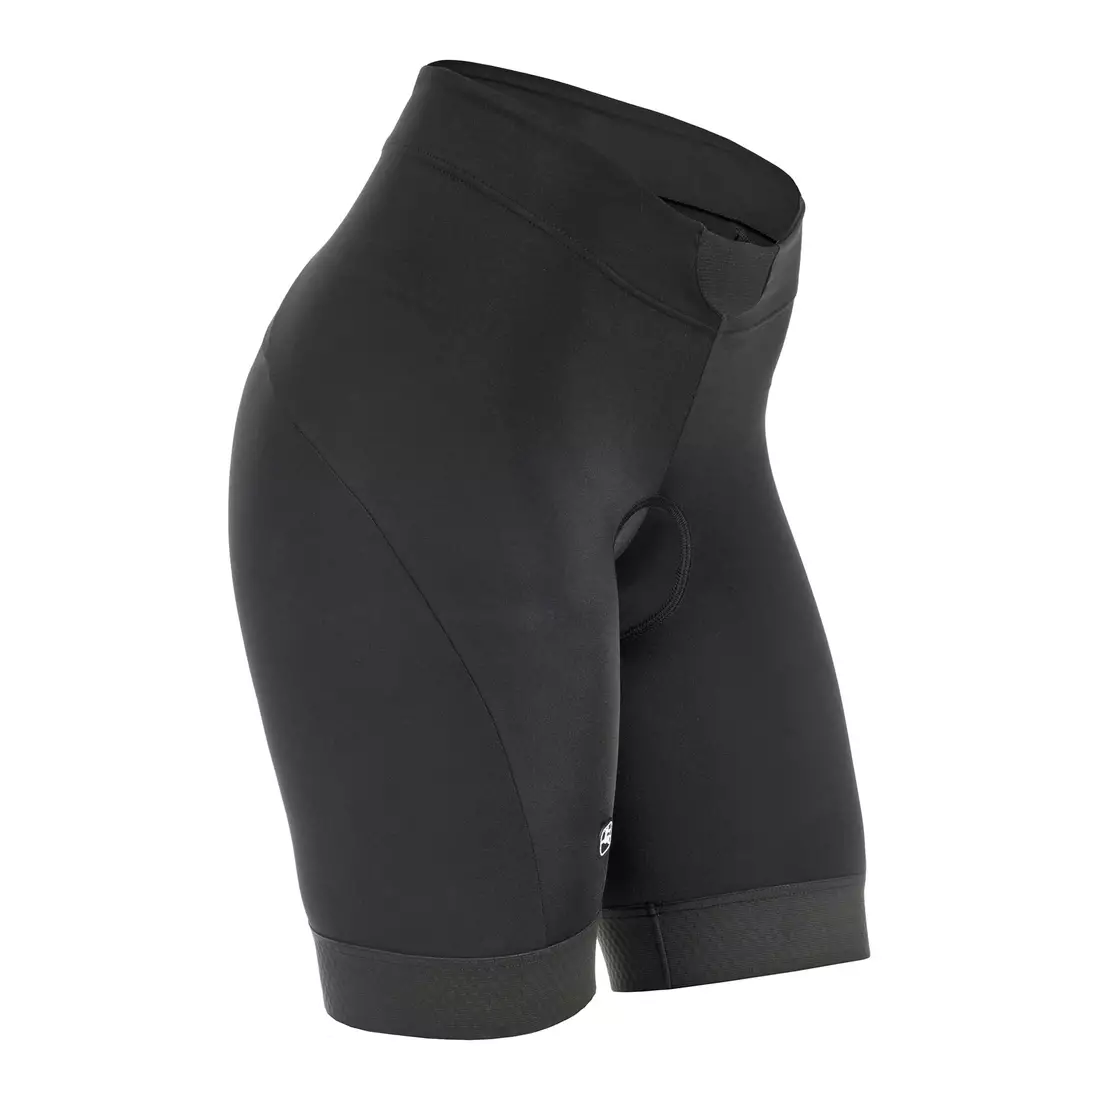 GIORDANA SILVERLINE women's cycling shorts, black